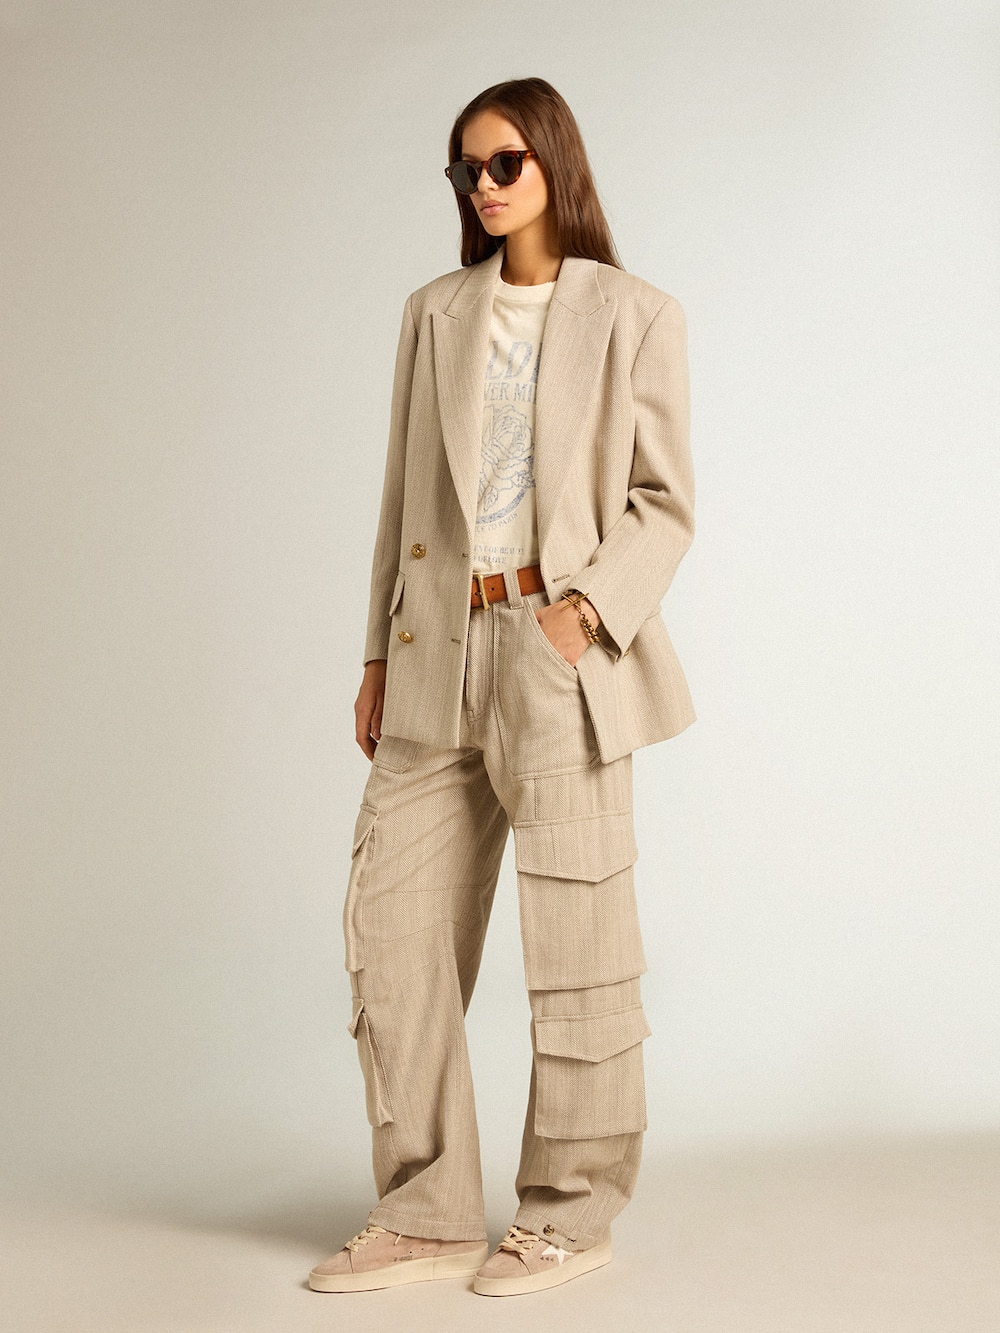 Golden Goose - Women's dark olive-colored cotton cargo pants with a herringbone design in 